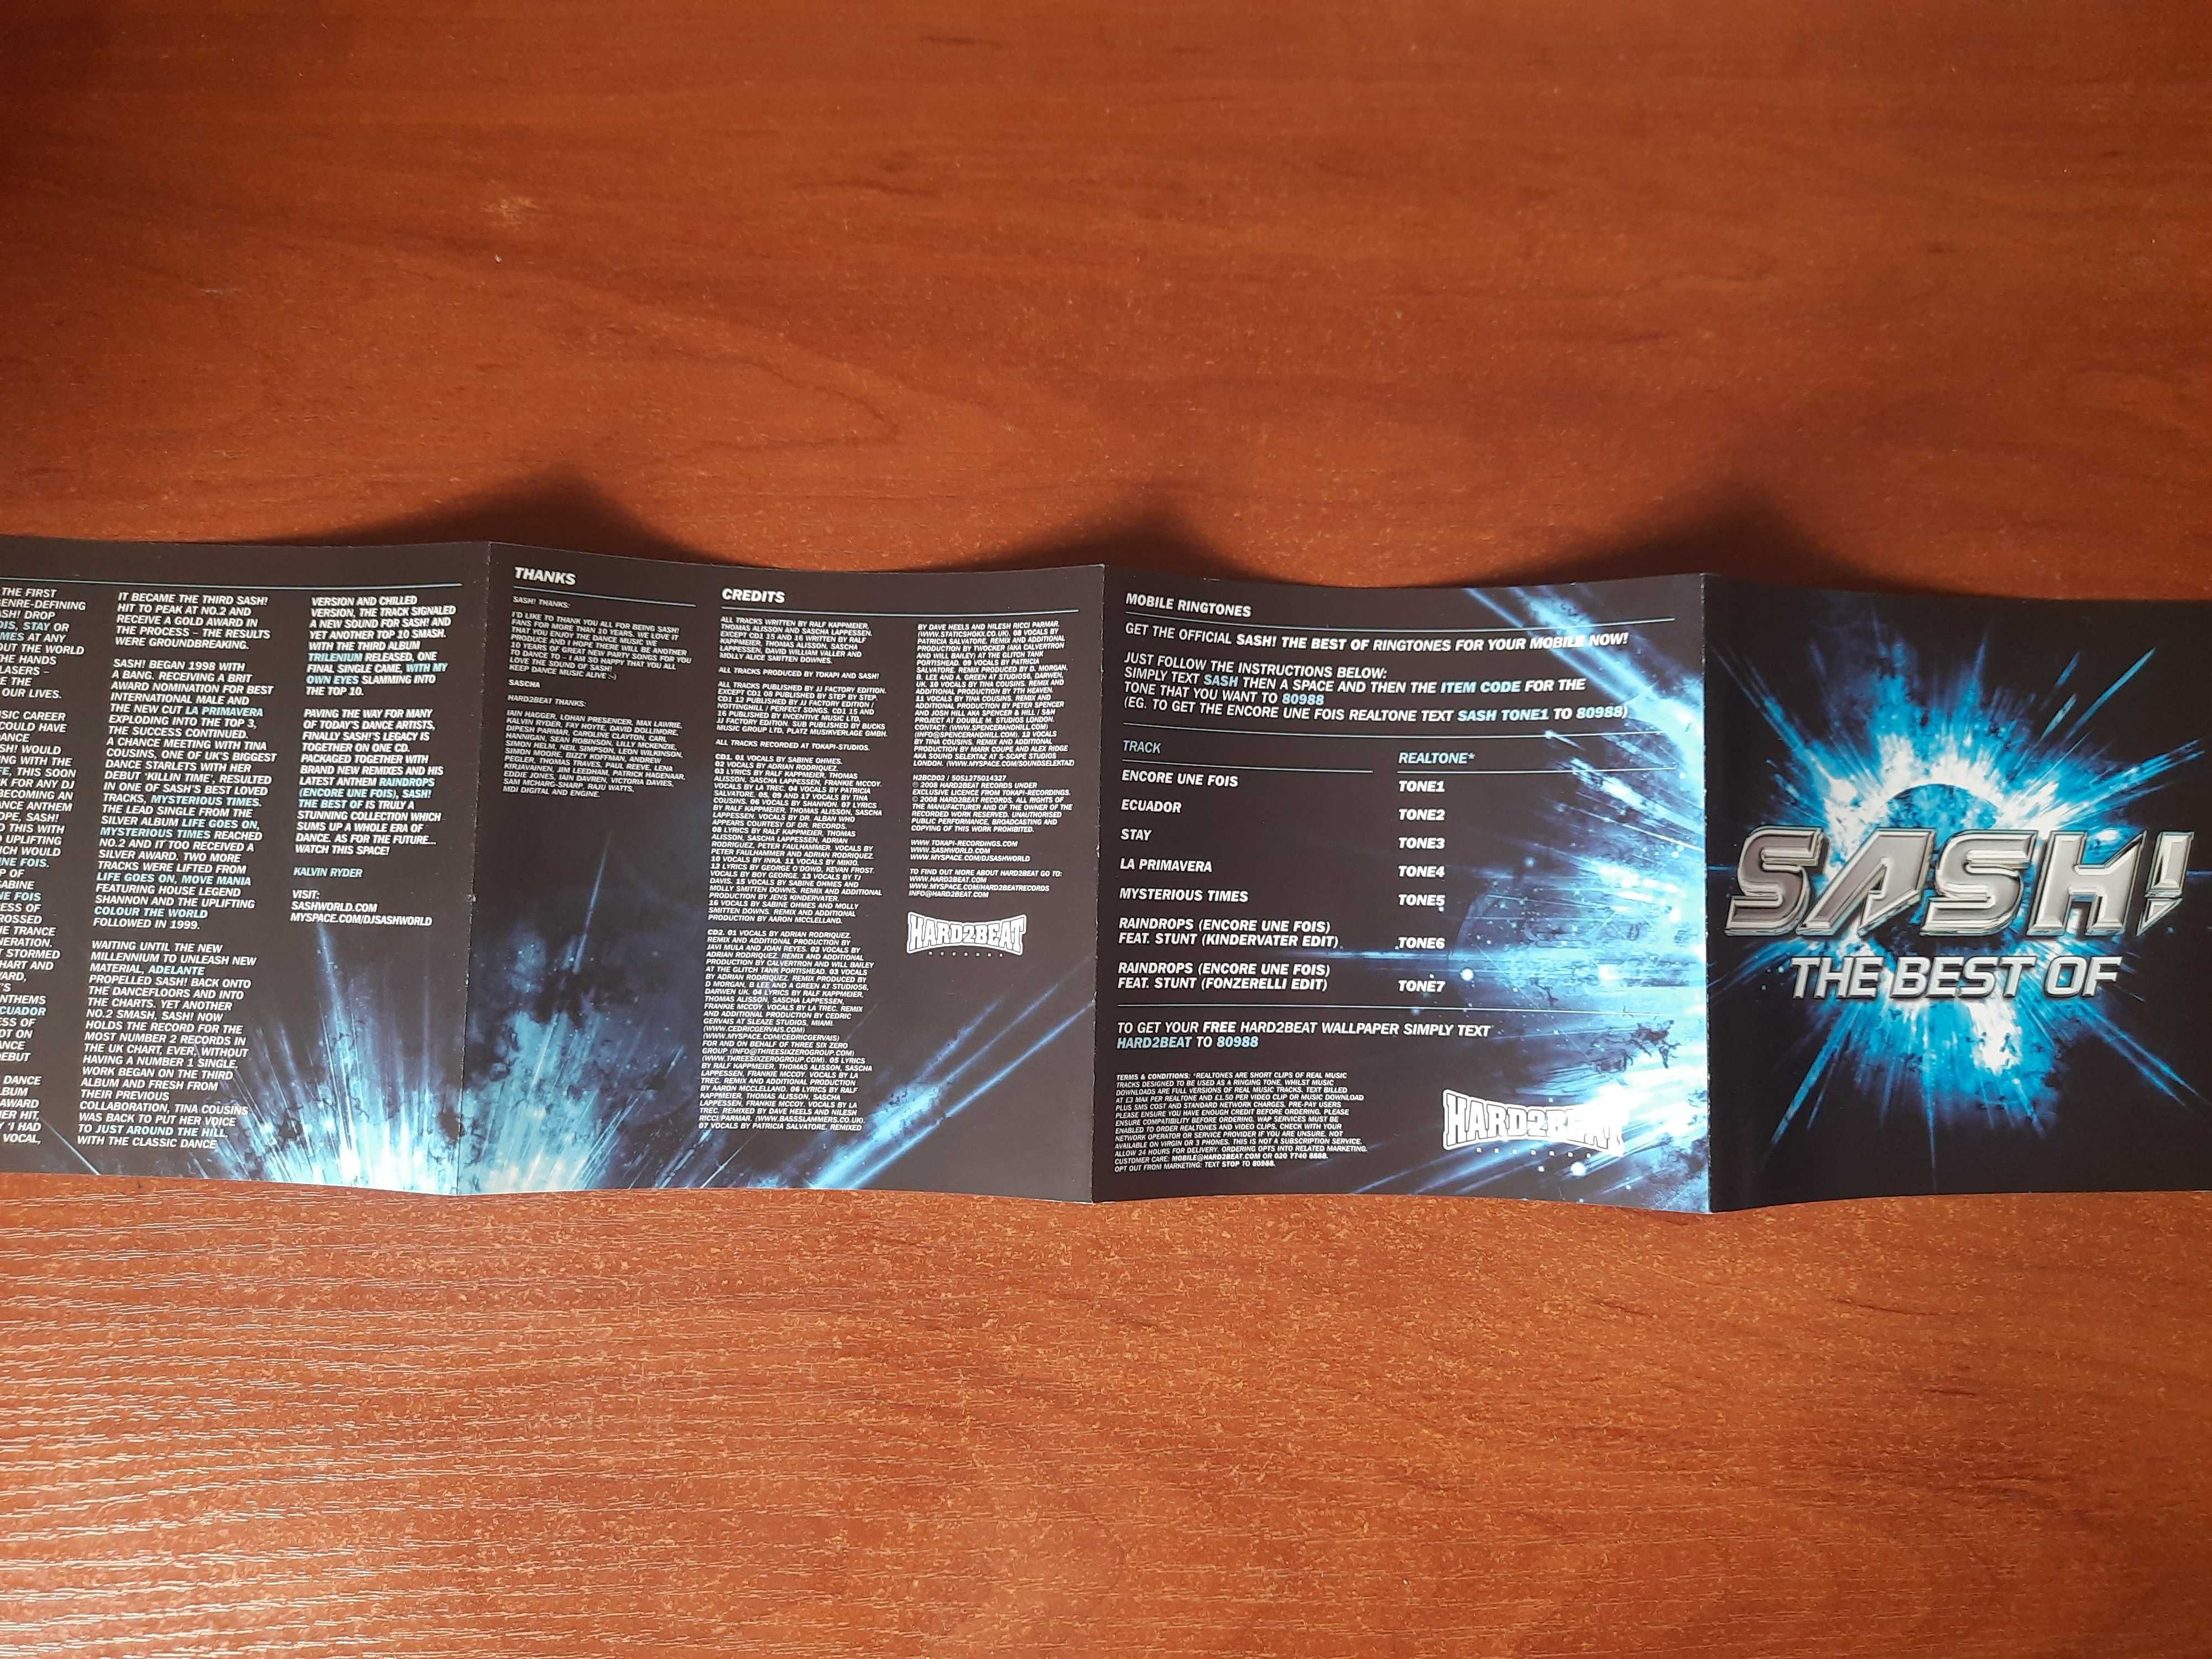 Audio CD Sash! - The Best OF (2 CD)